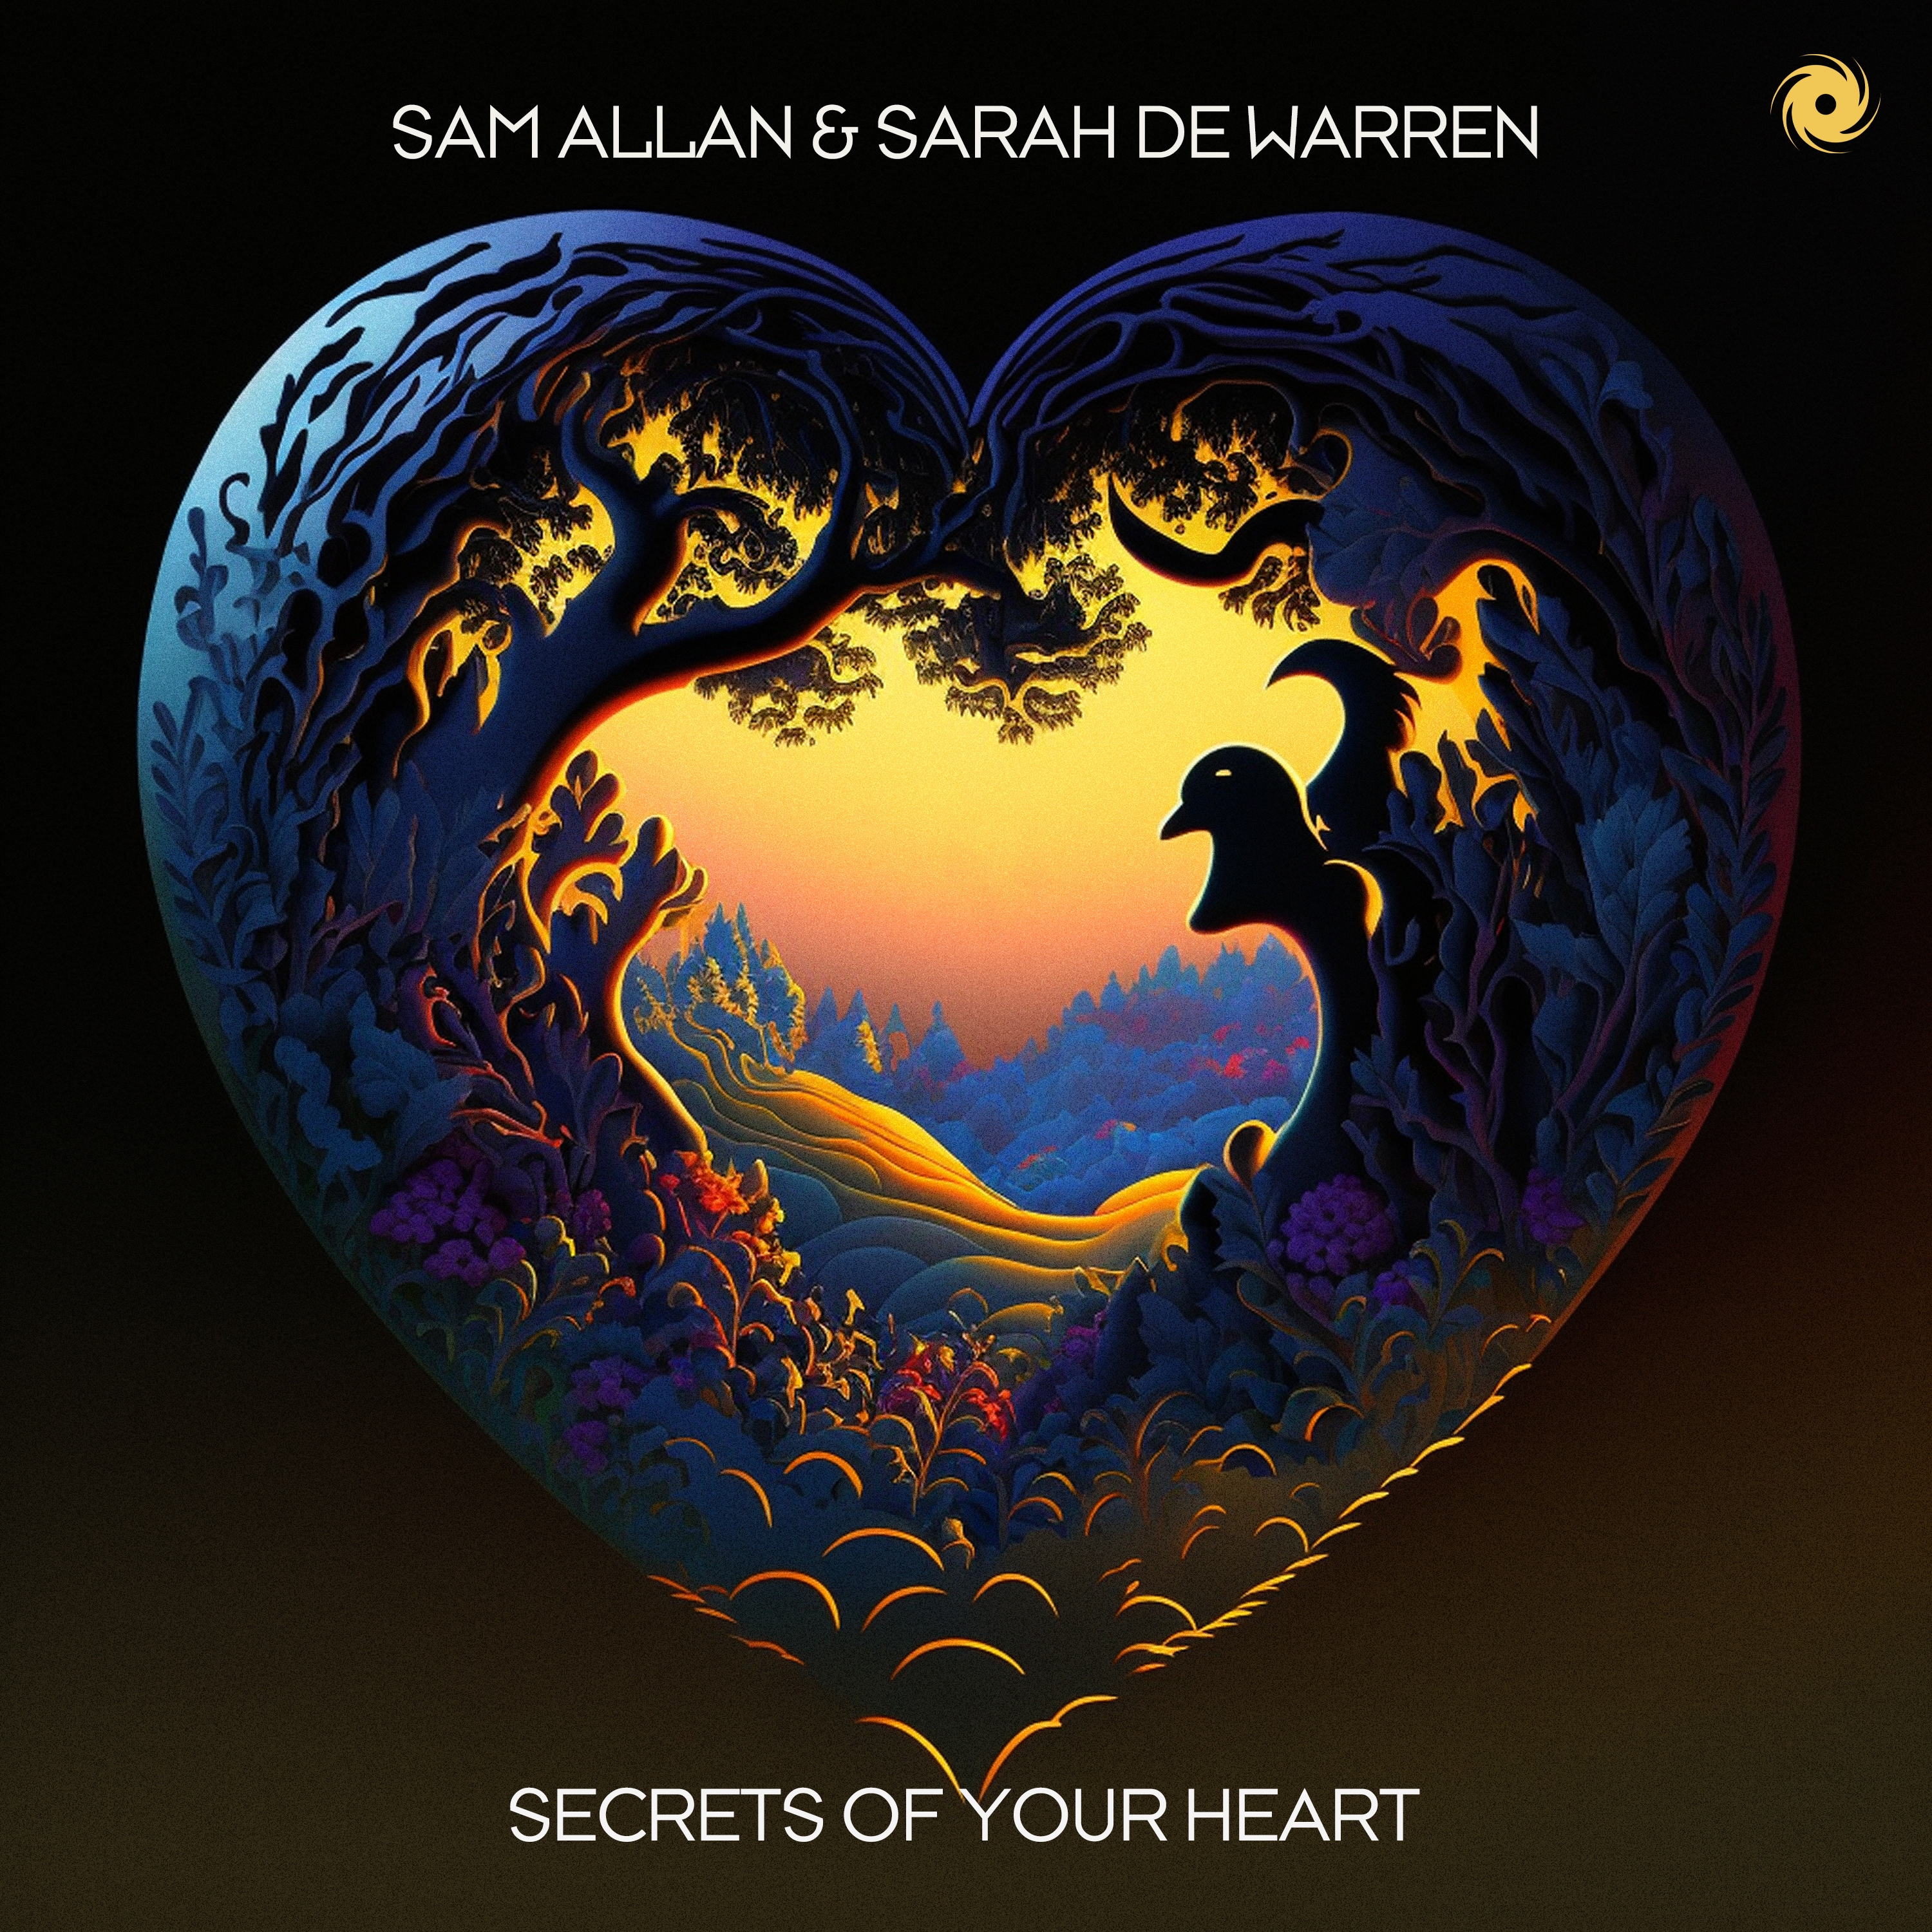  SAM ALLAN & SARAH DE WARREN “SECRETS OF YOUR HEART”